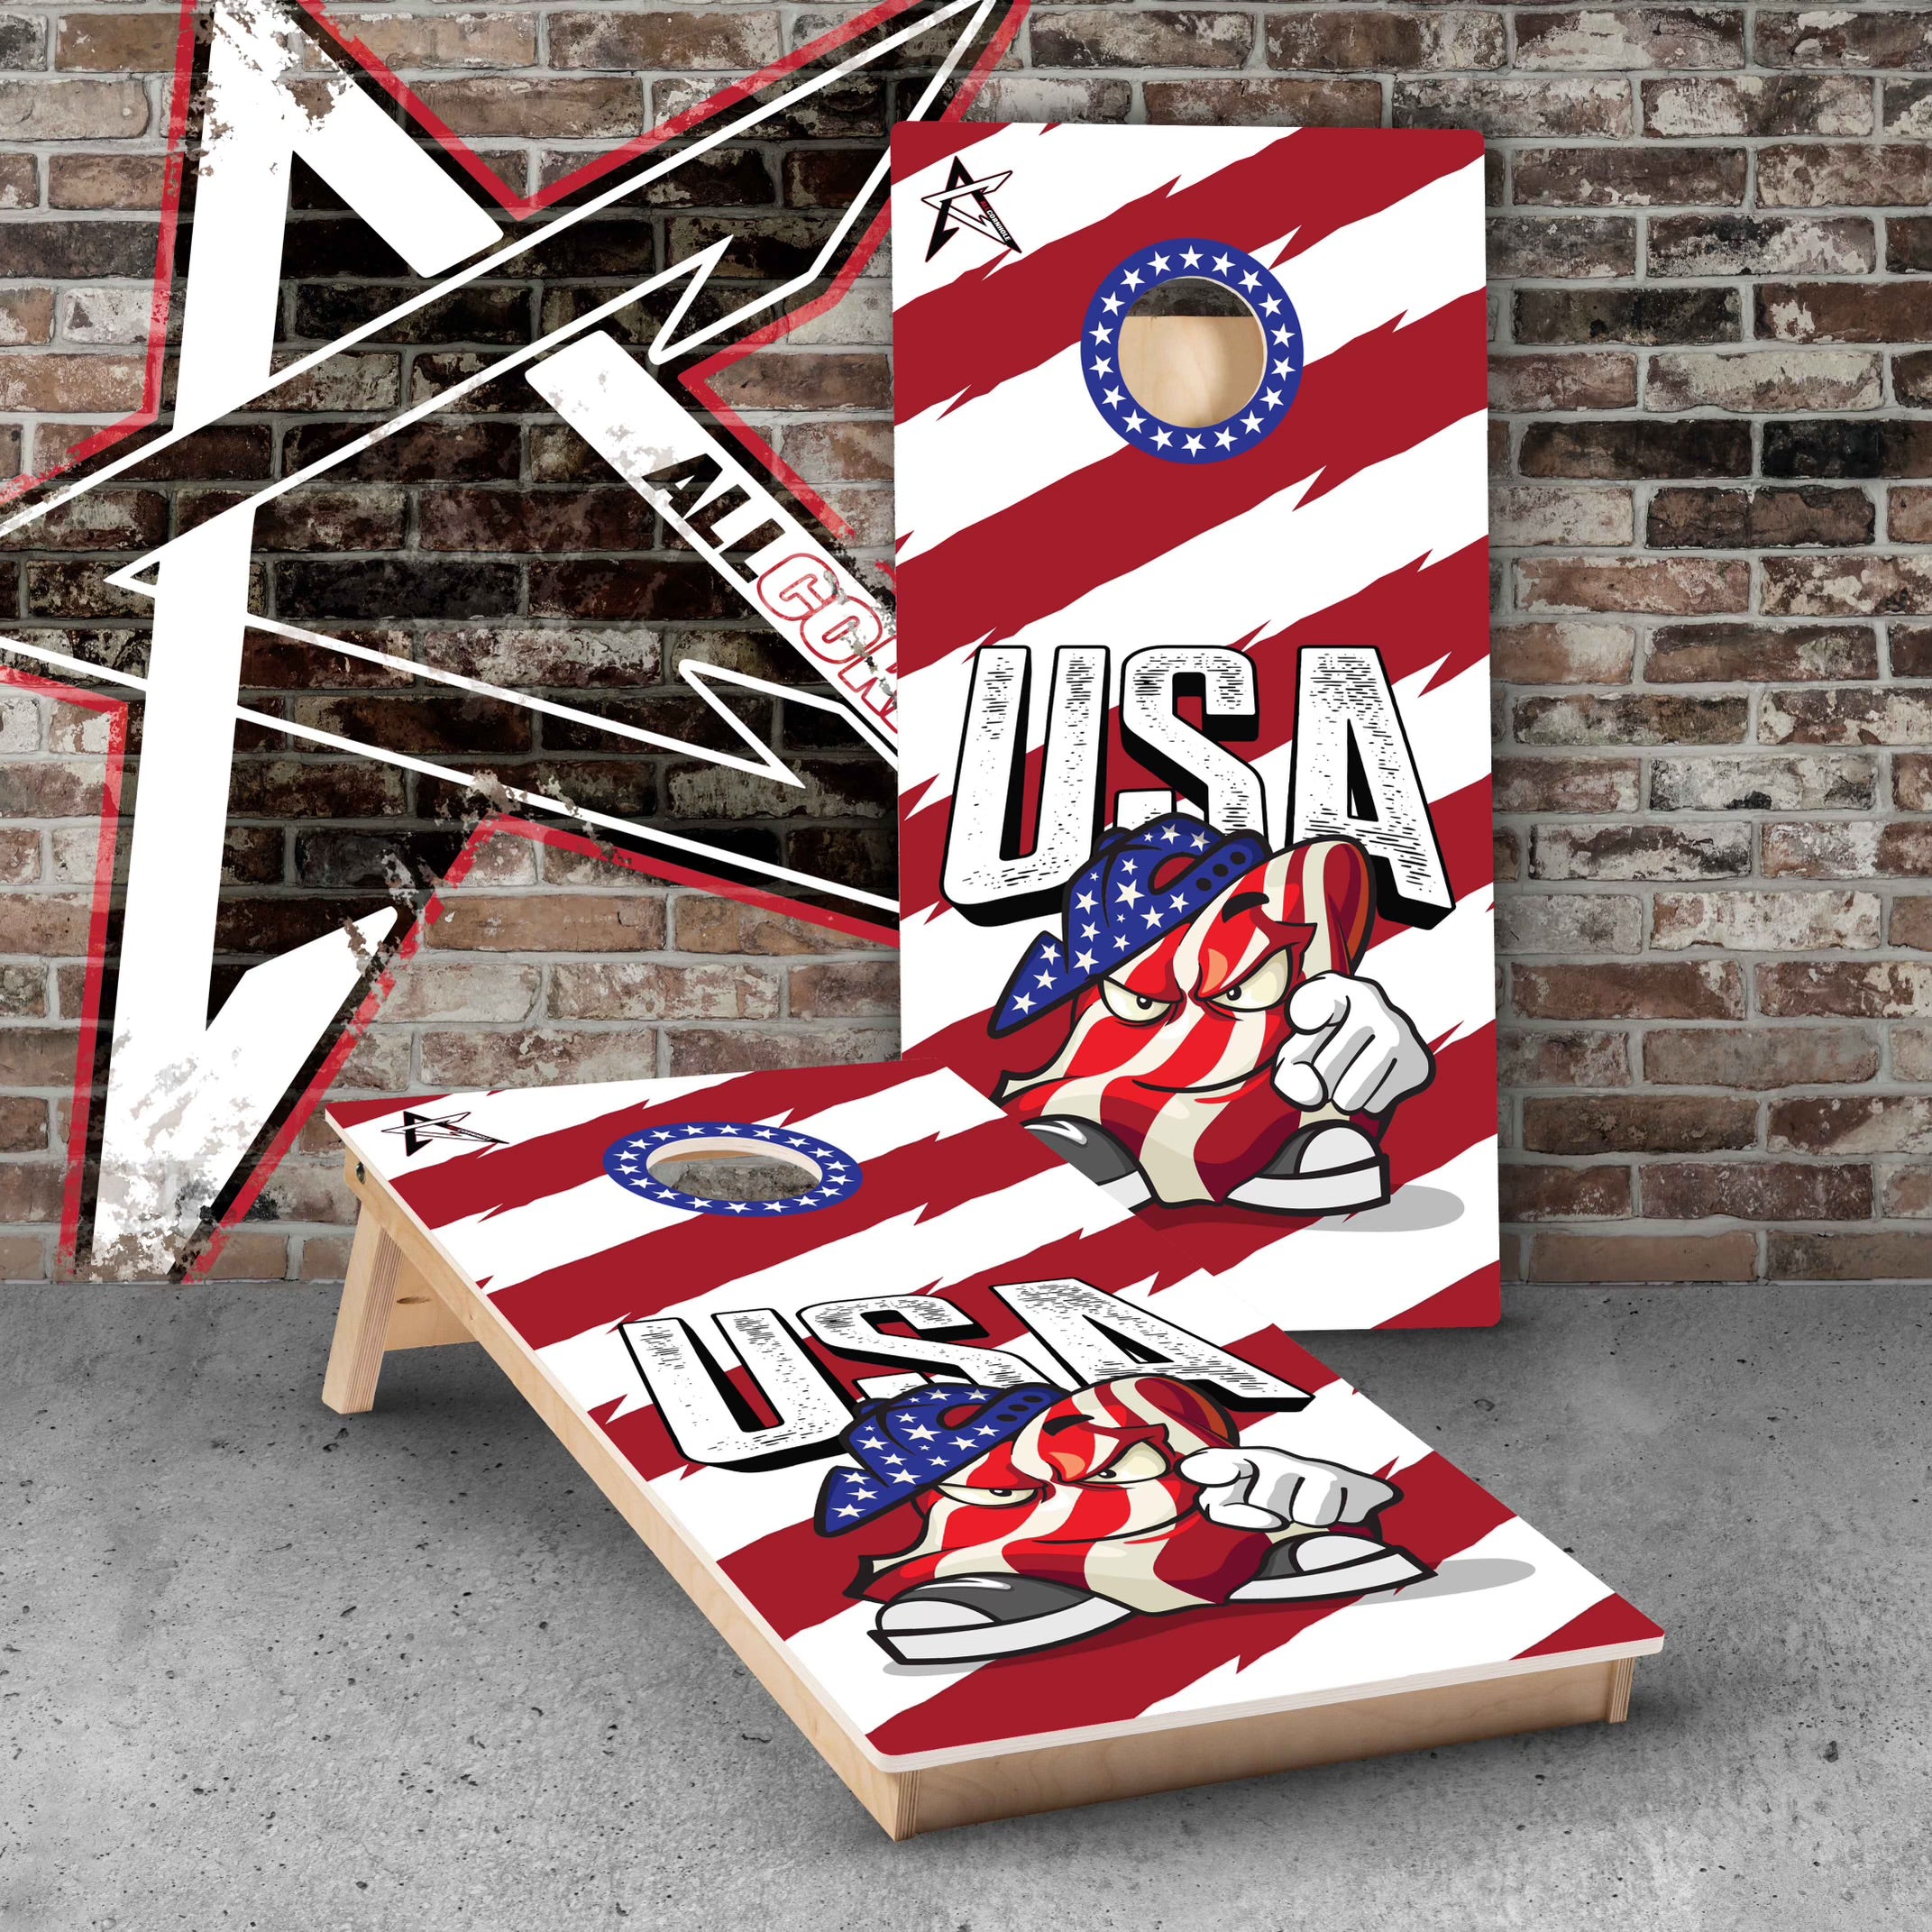 AllCornhole "USA Thuggy" Boards - Multiple Models